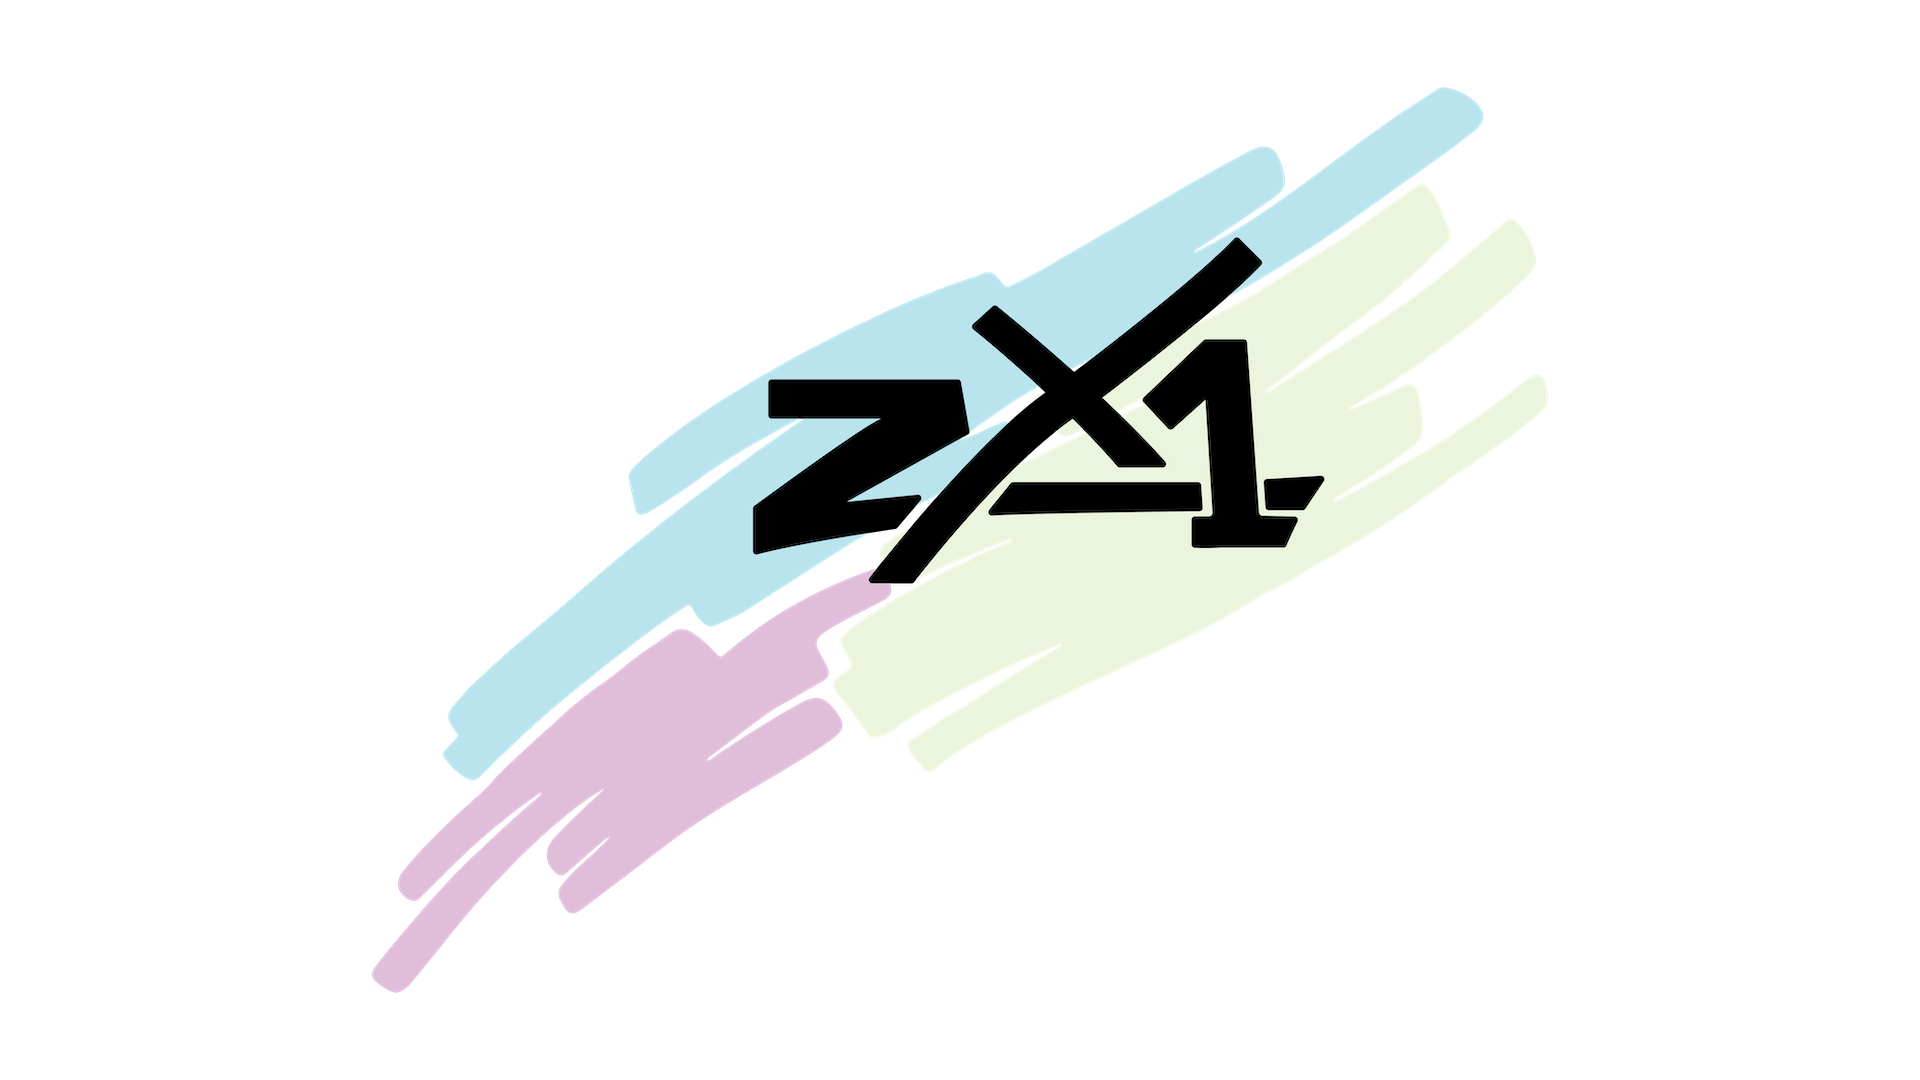 Vitus ZX-1 badge